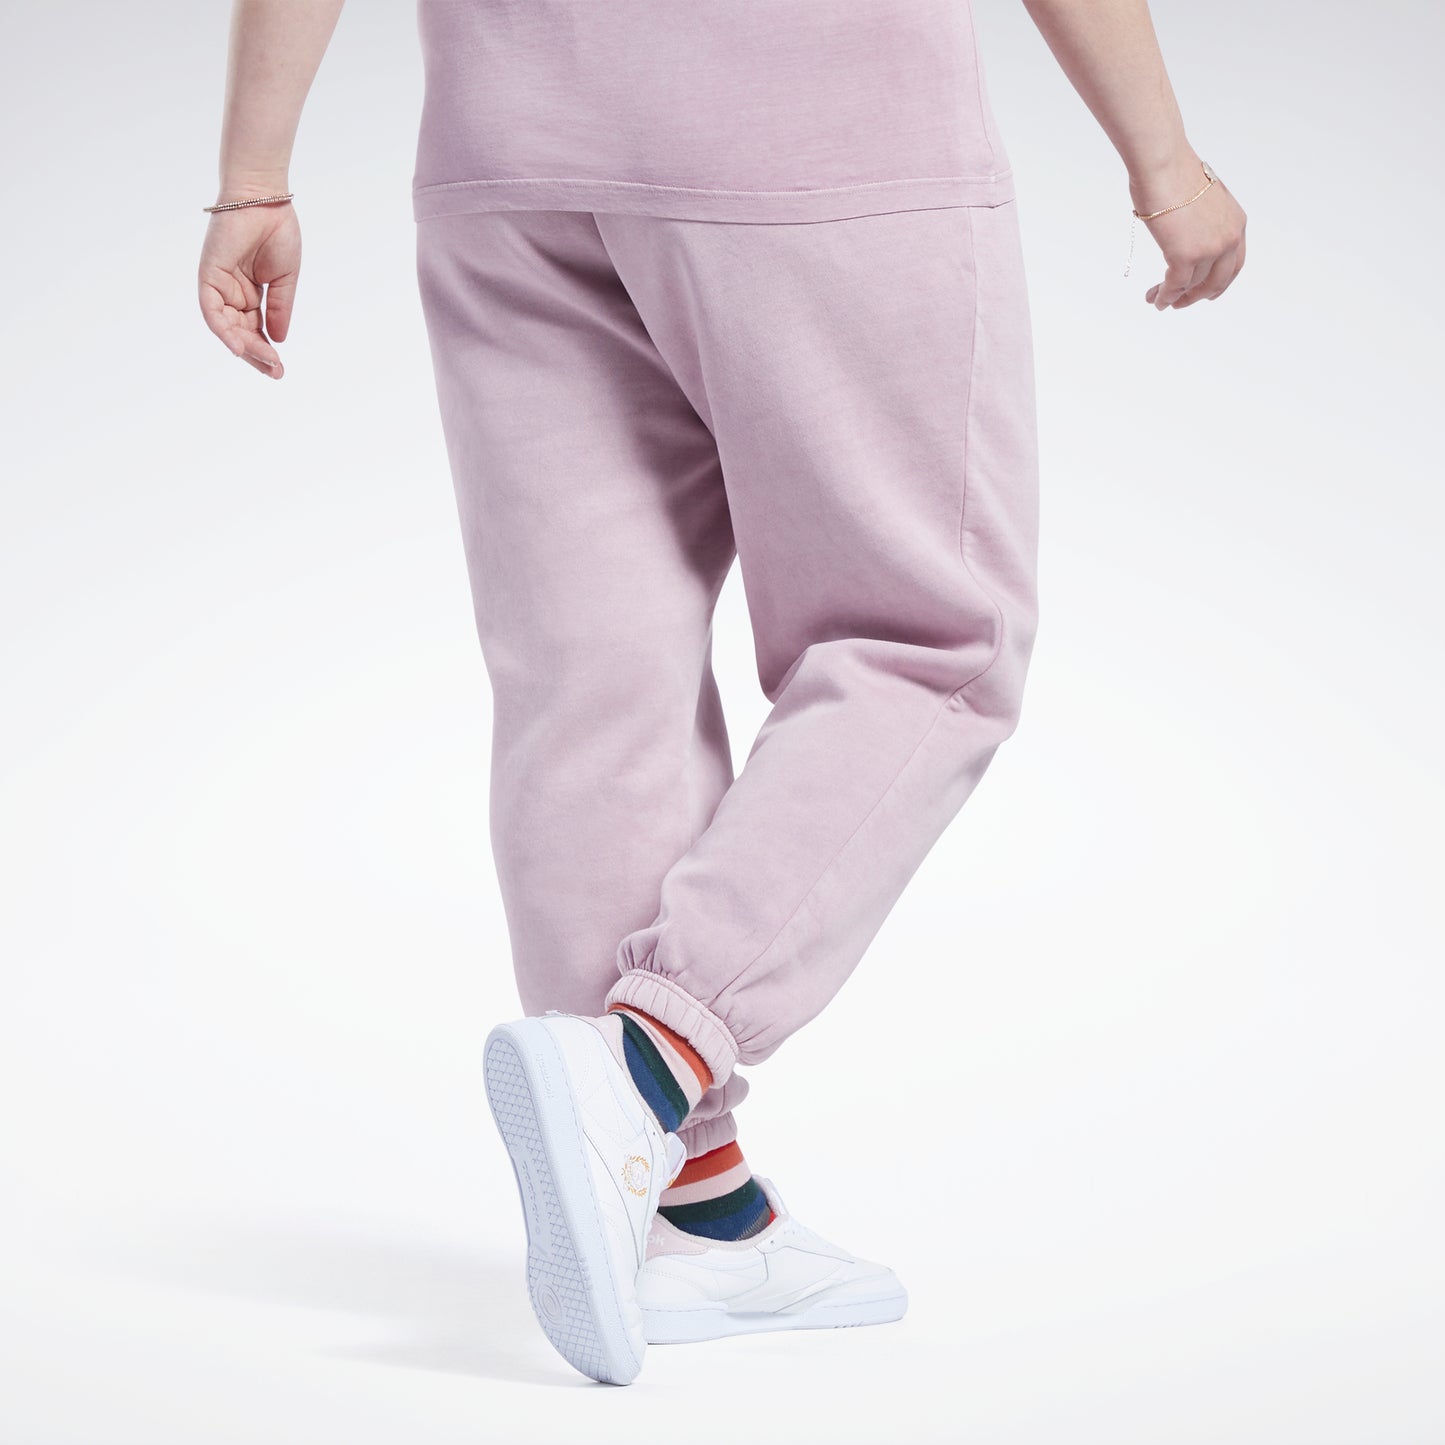 Reebok Purple Active Pants Size XL - 72% off